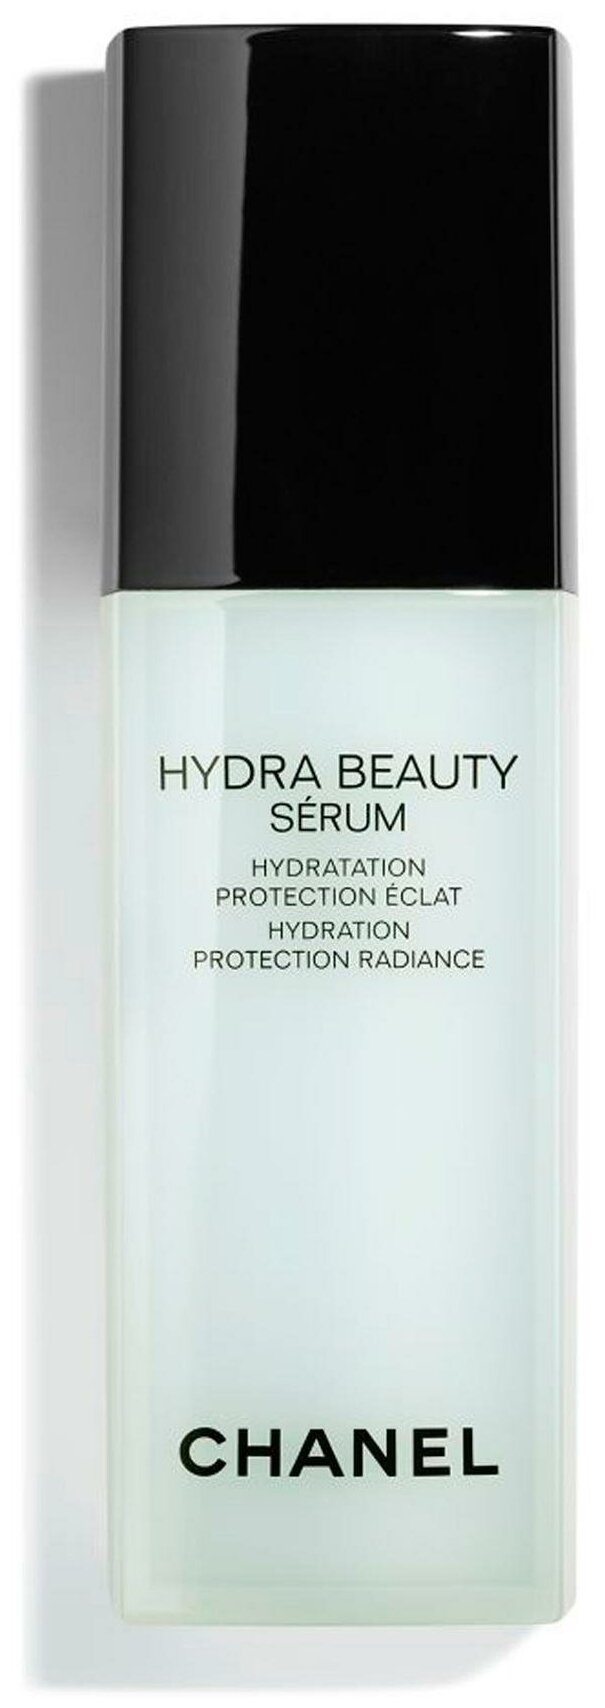 Chanel Hydra Beauty Micro Serum Интенсивно увлажняющая сыворотка для лица, 30 мл